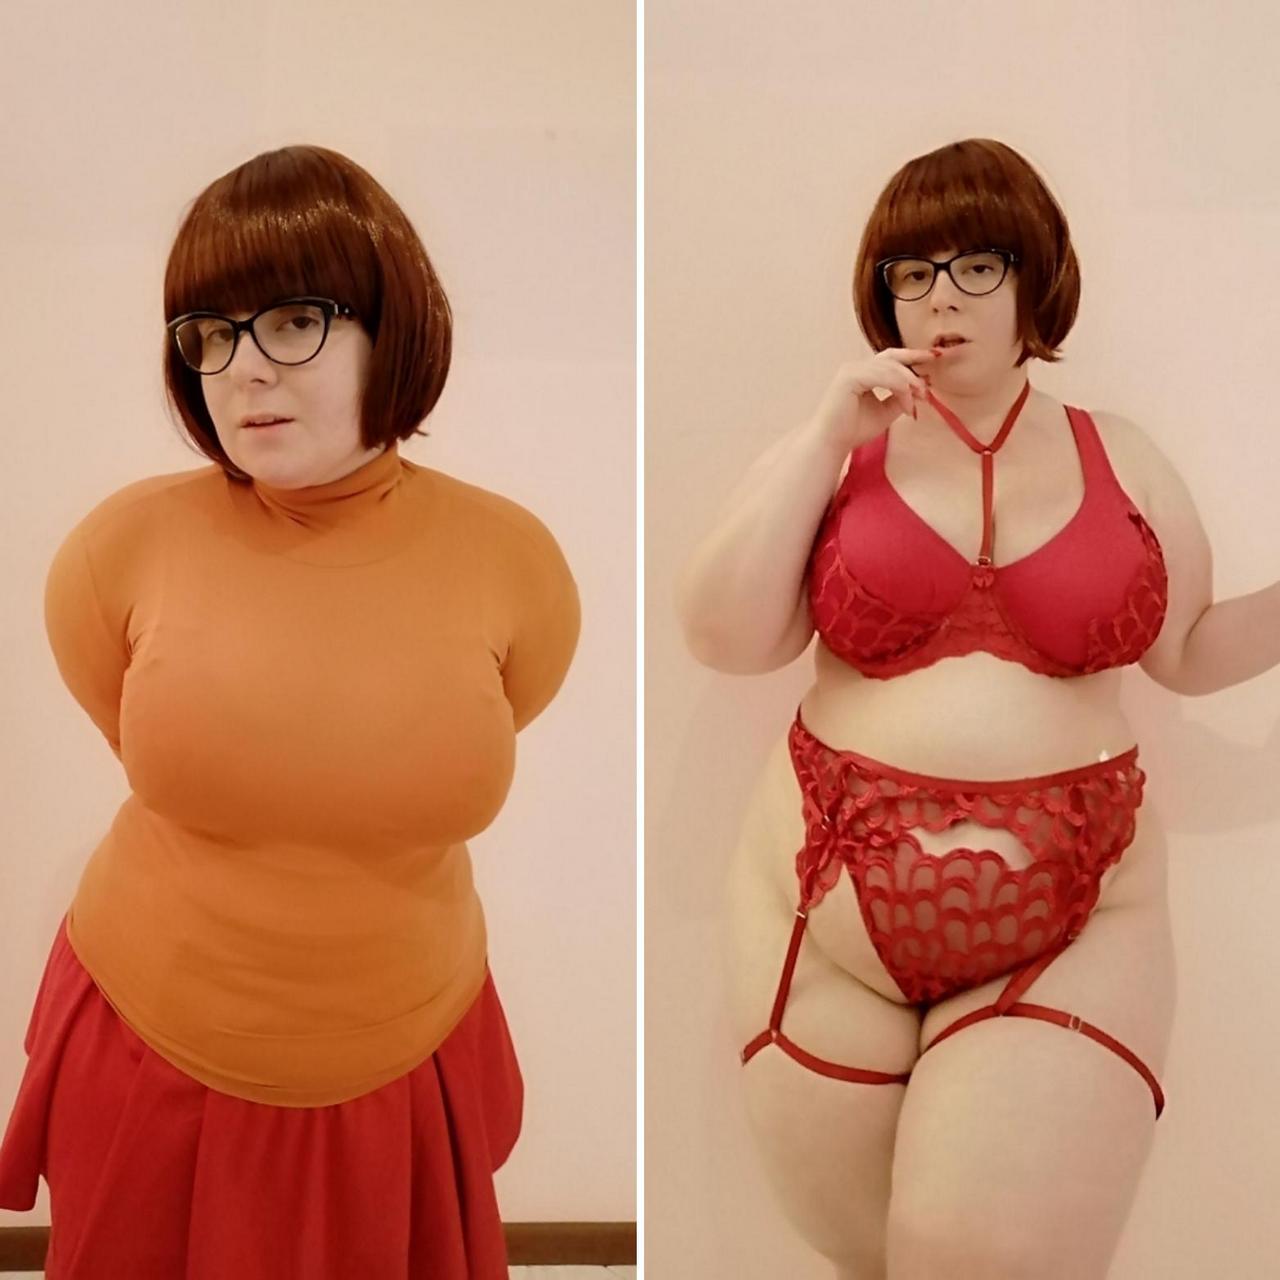 Velma Goes Naught